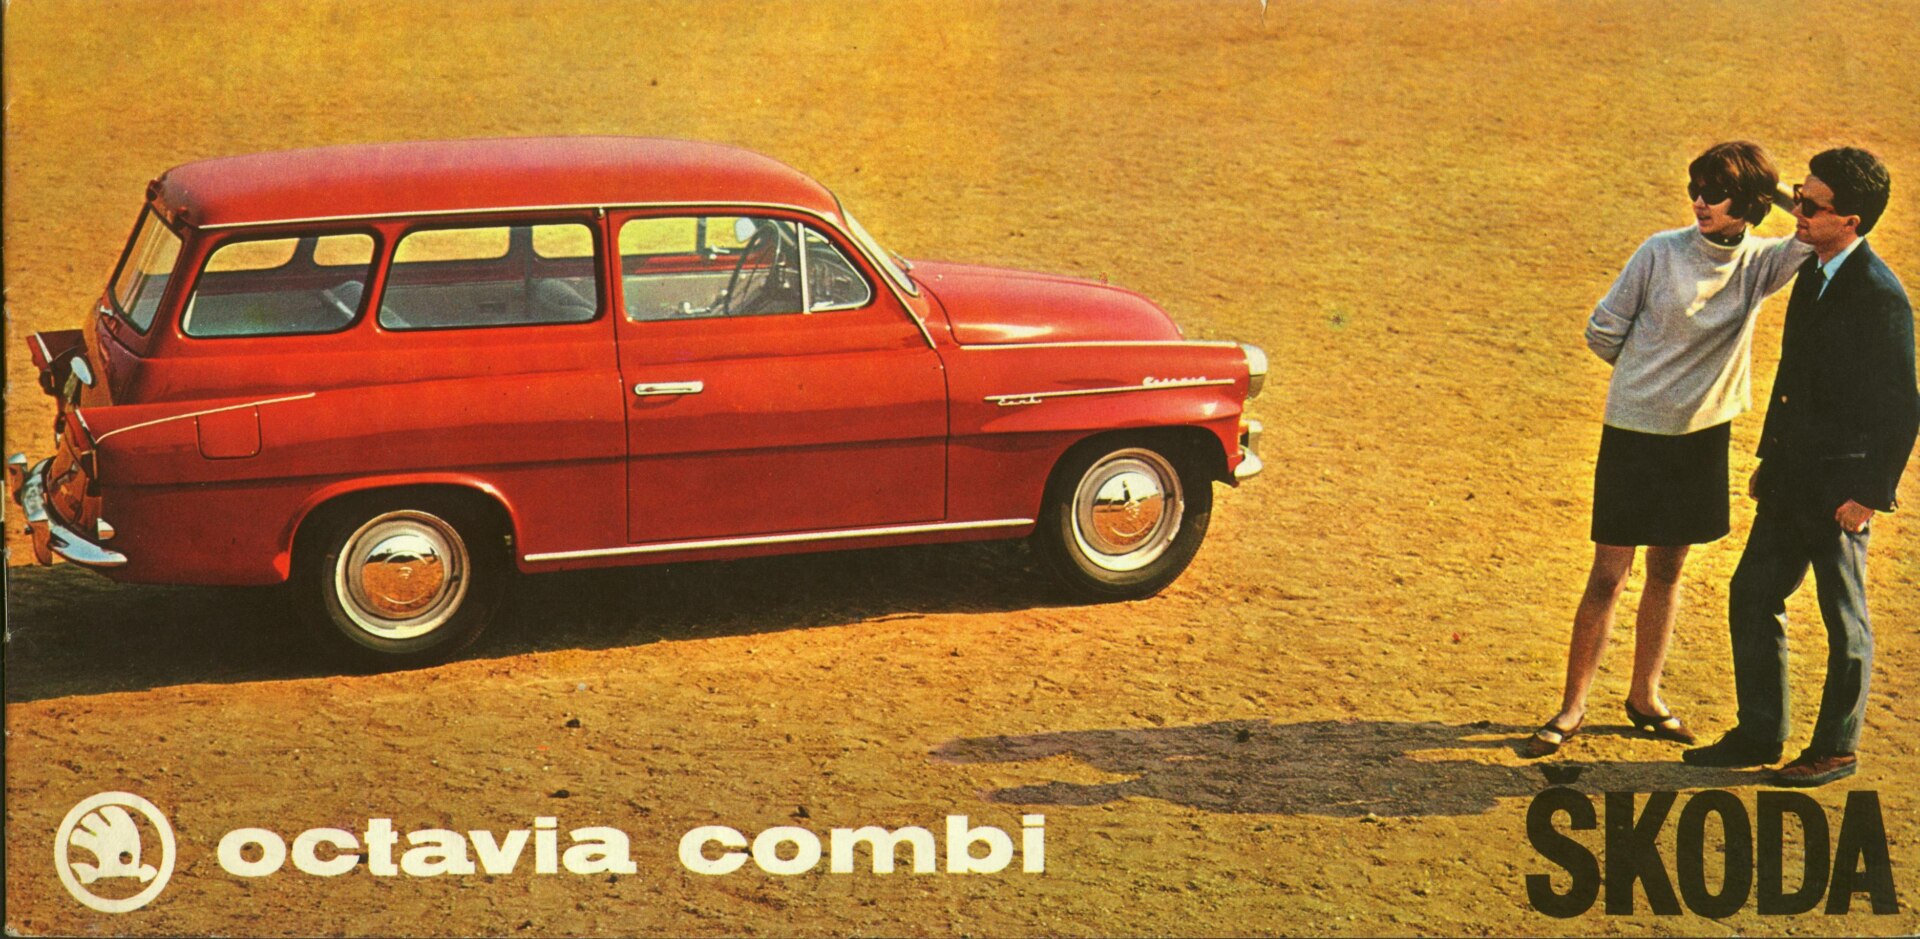 230301 25 Years Of The Skoda Octavia Combi 2 3806f301 1920x939